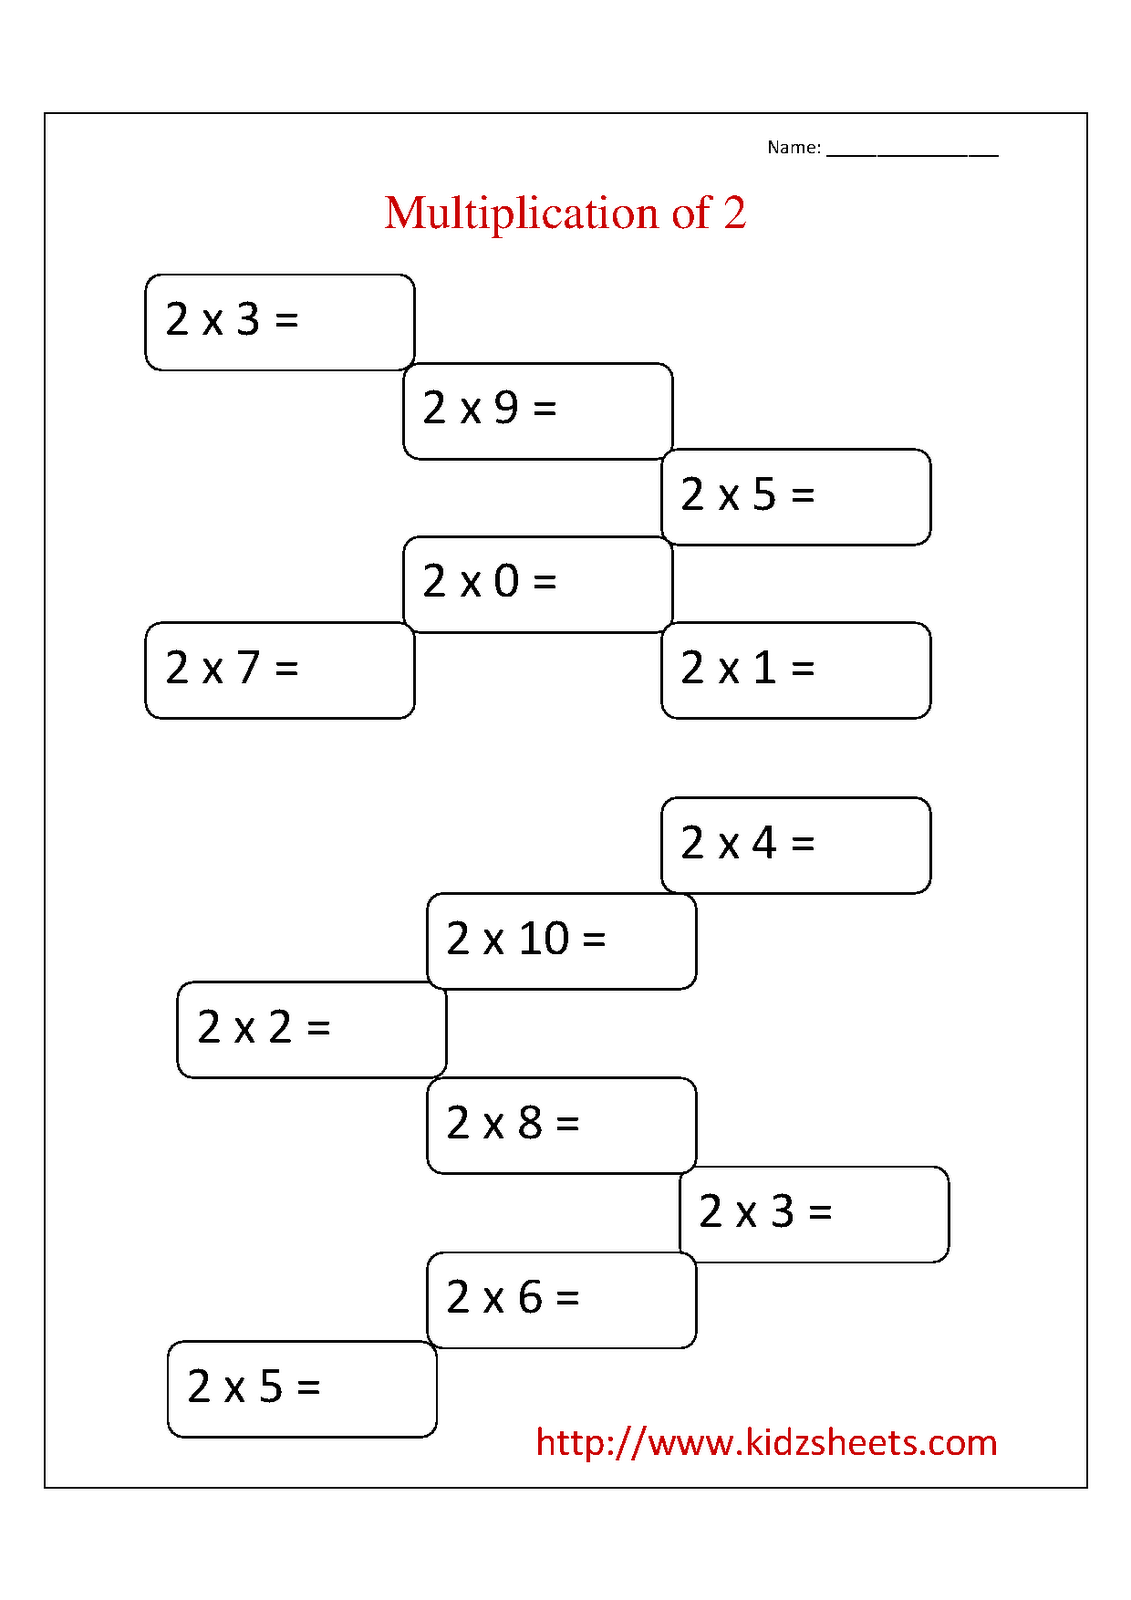 Kidz Worksheets Second Grade Multiplication Table 2 